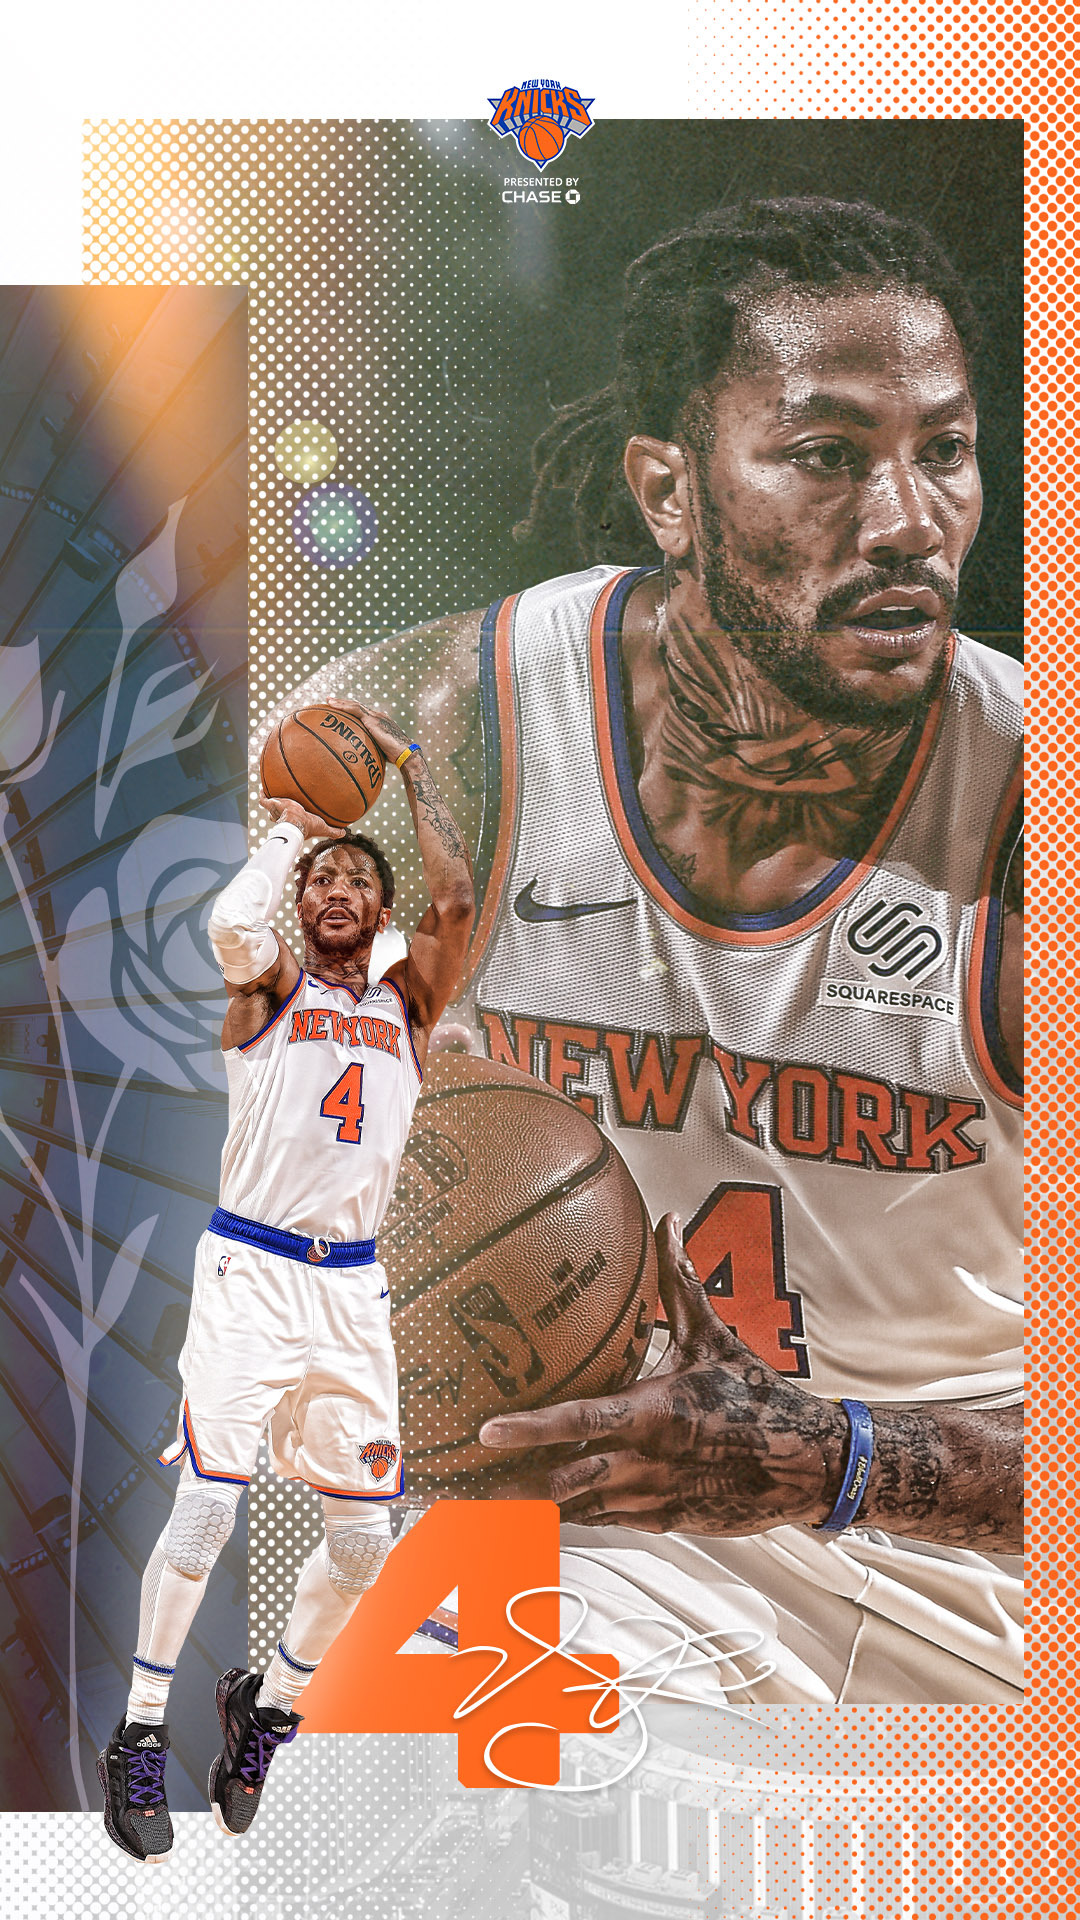 New York Knicks Wallpaper 2013 85 images